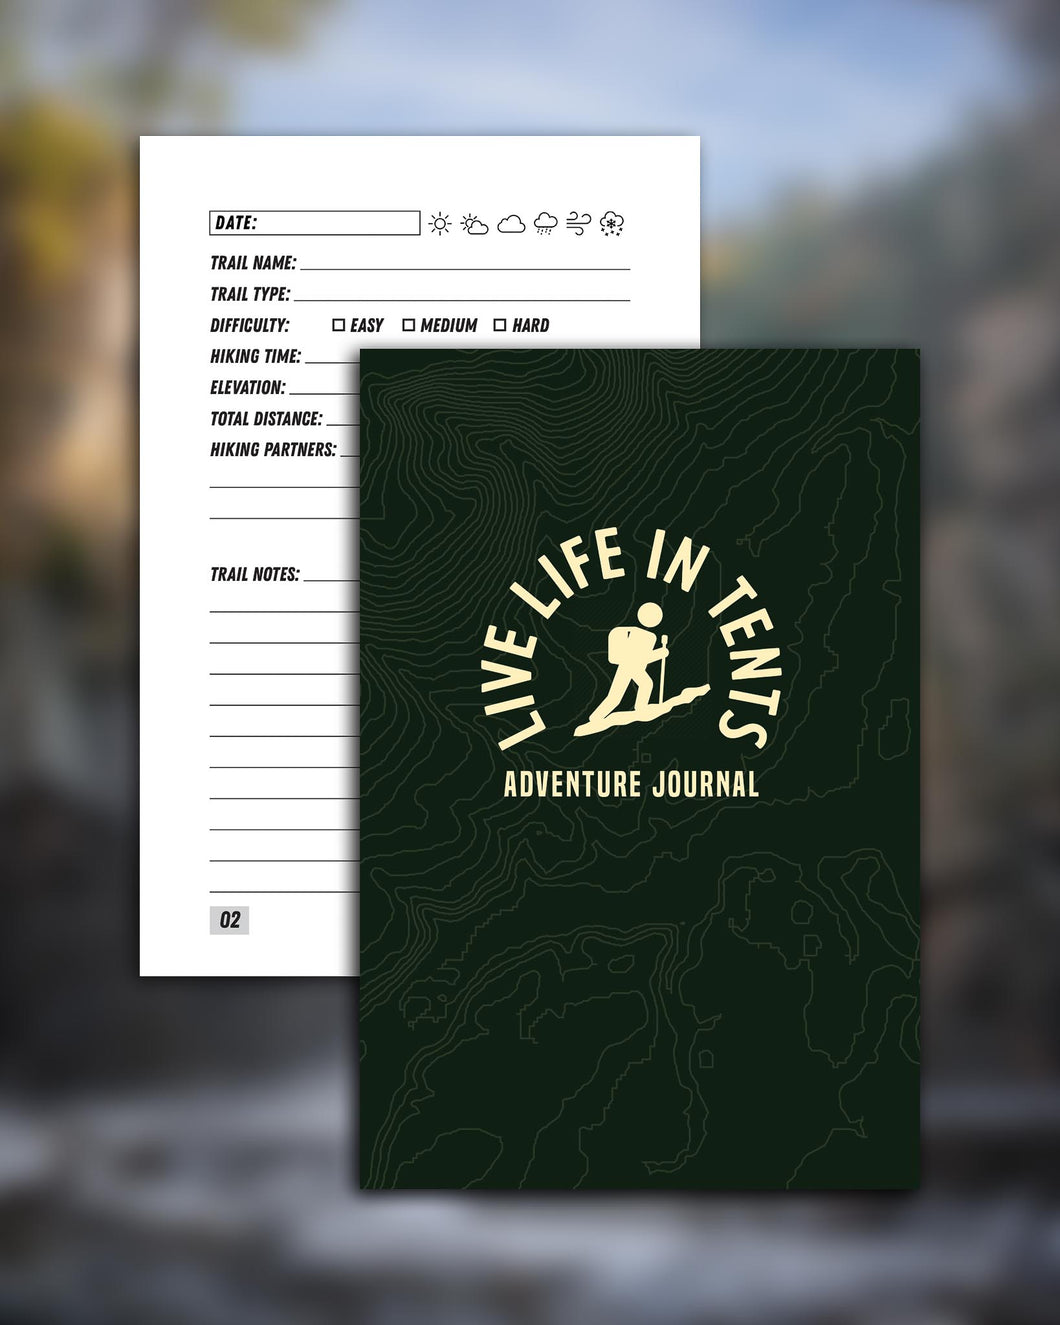 The Adventure Journal